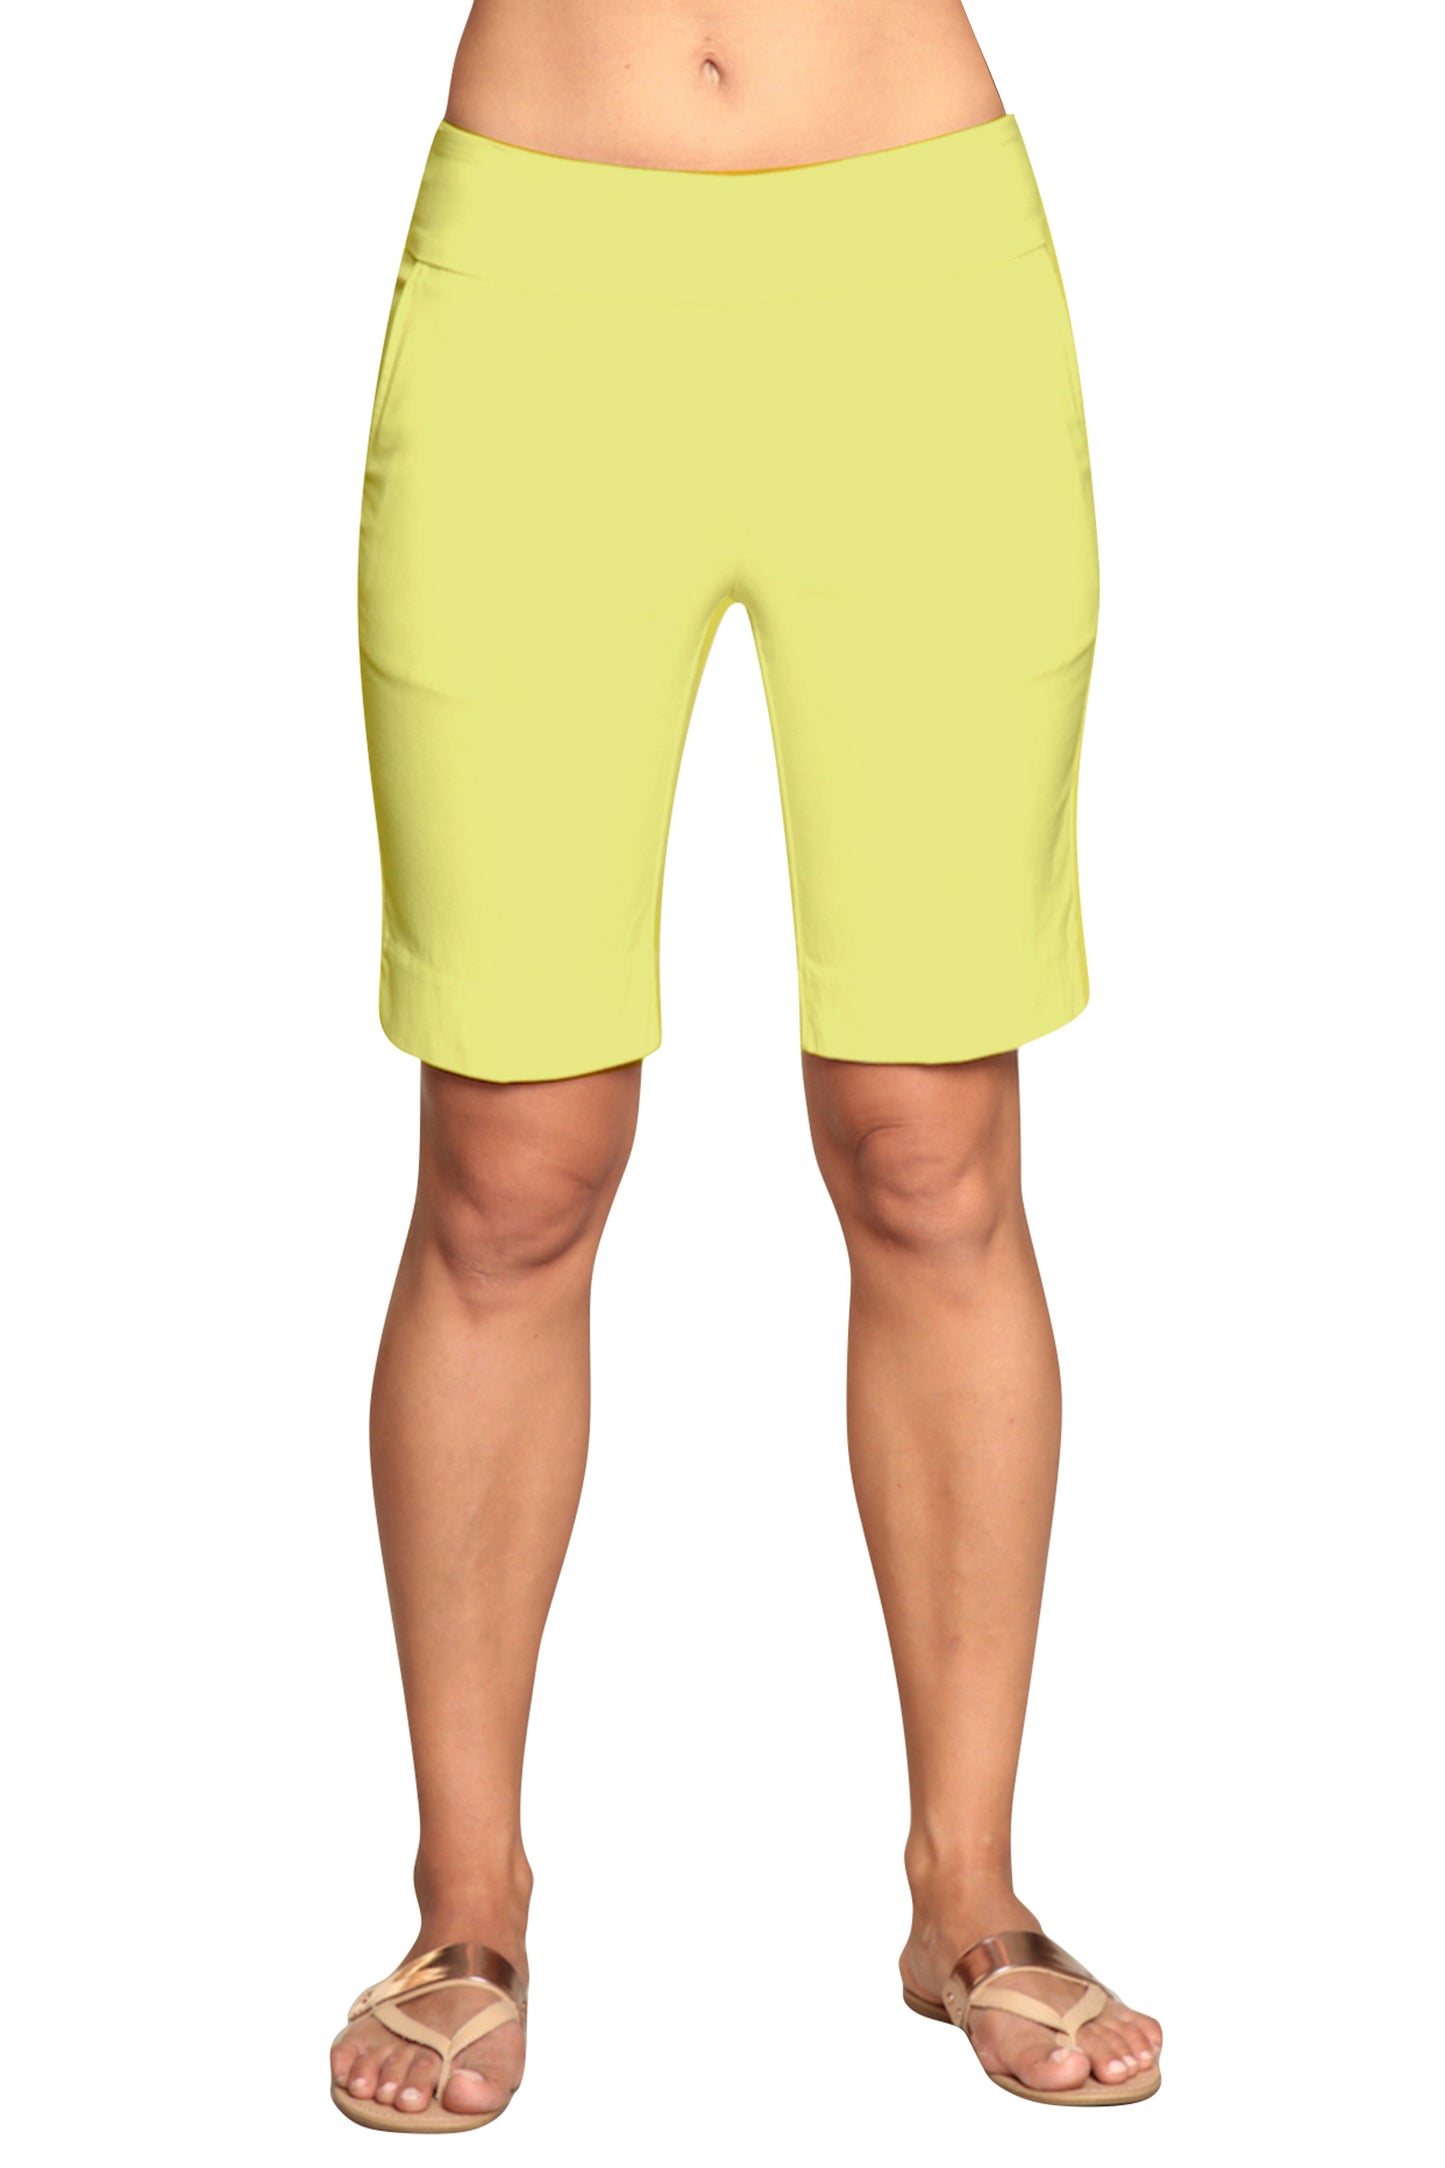 women's khaki golf shorts